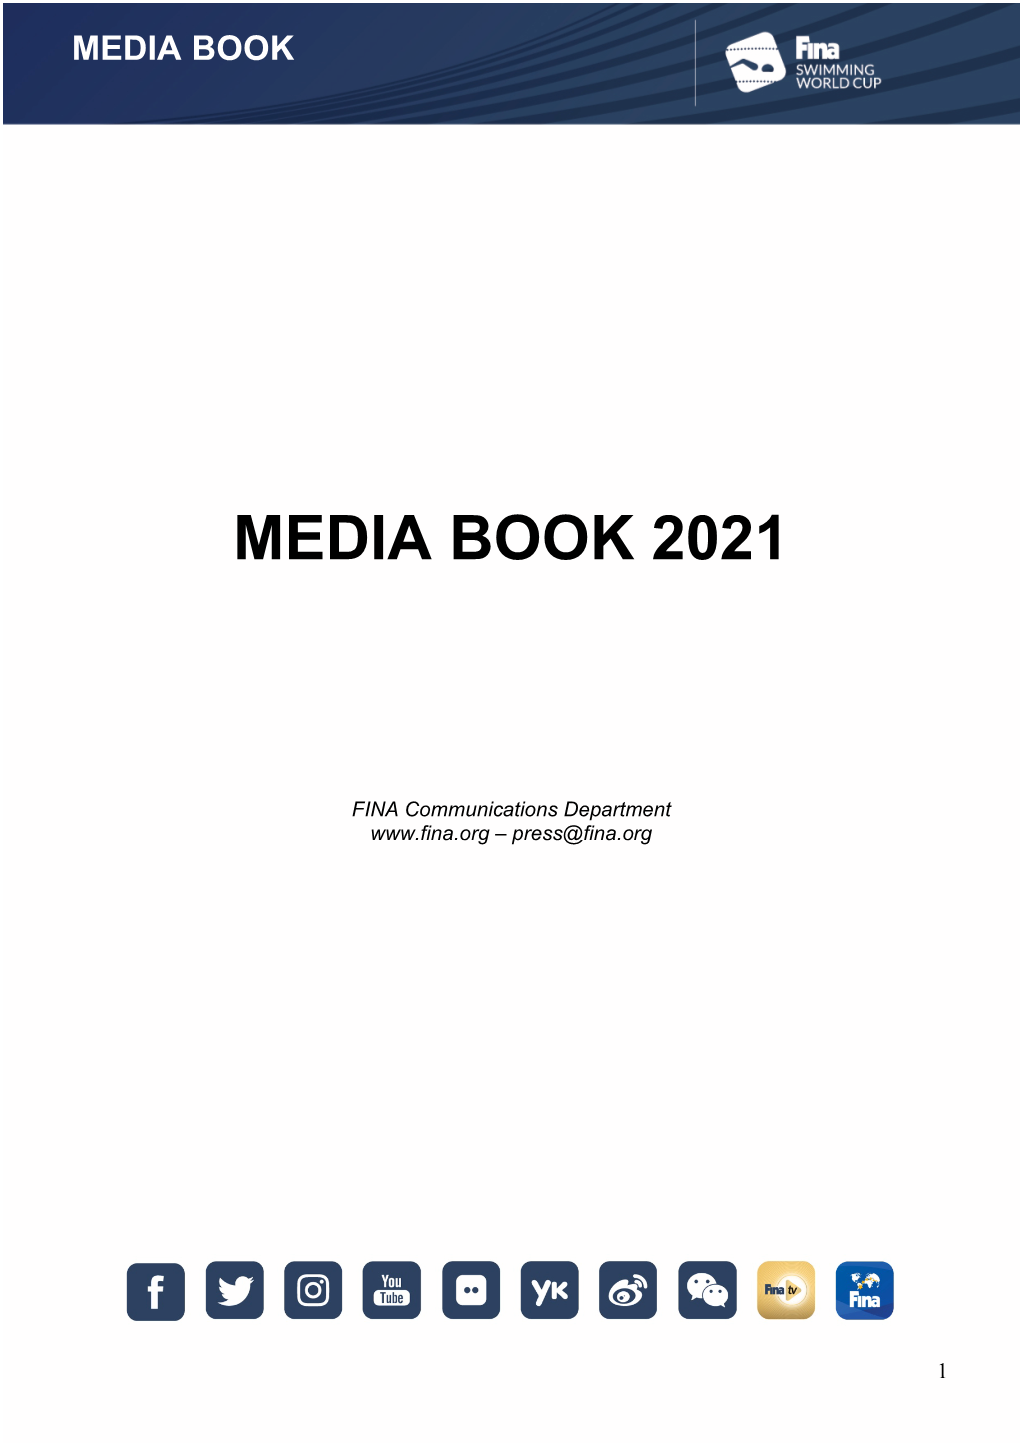 Media Book 2021